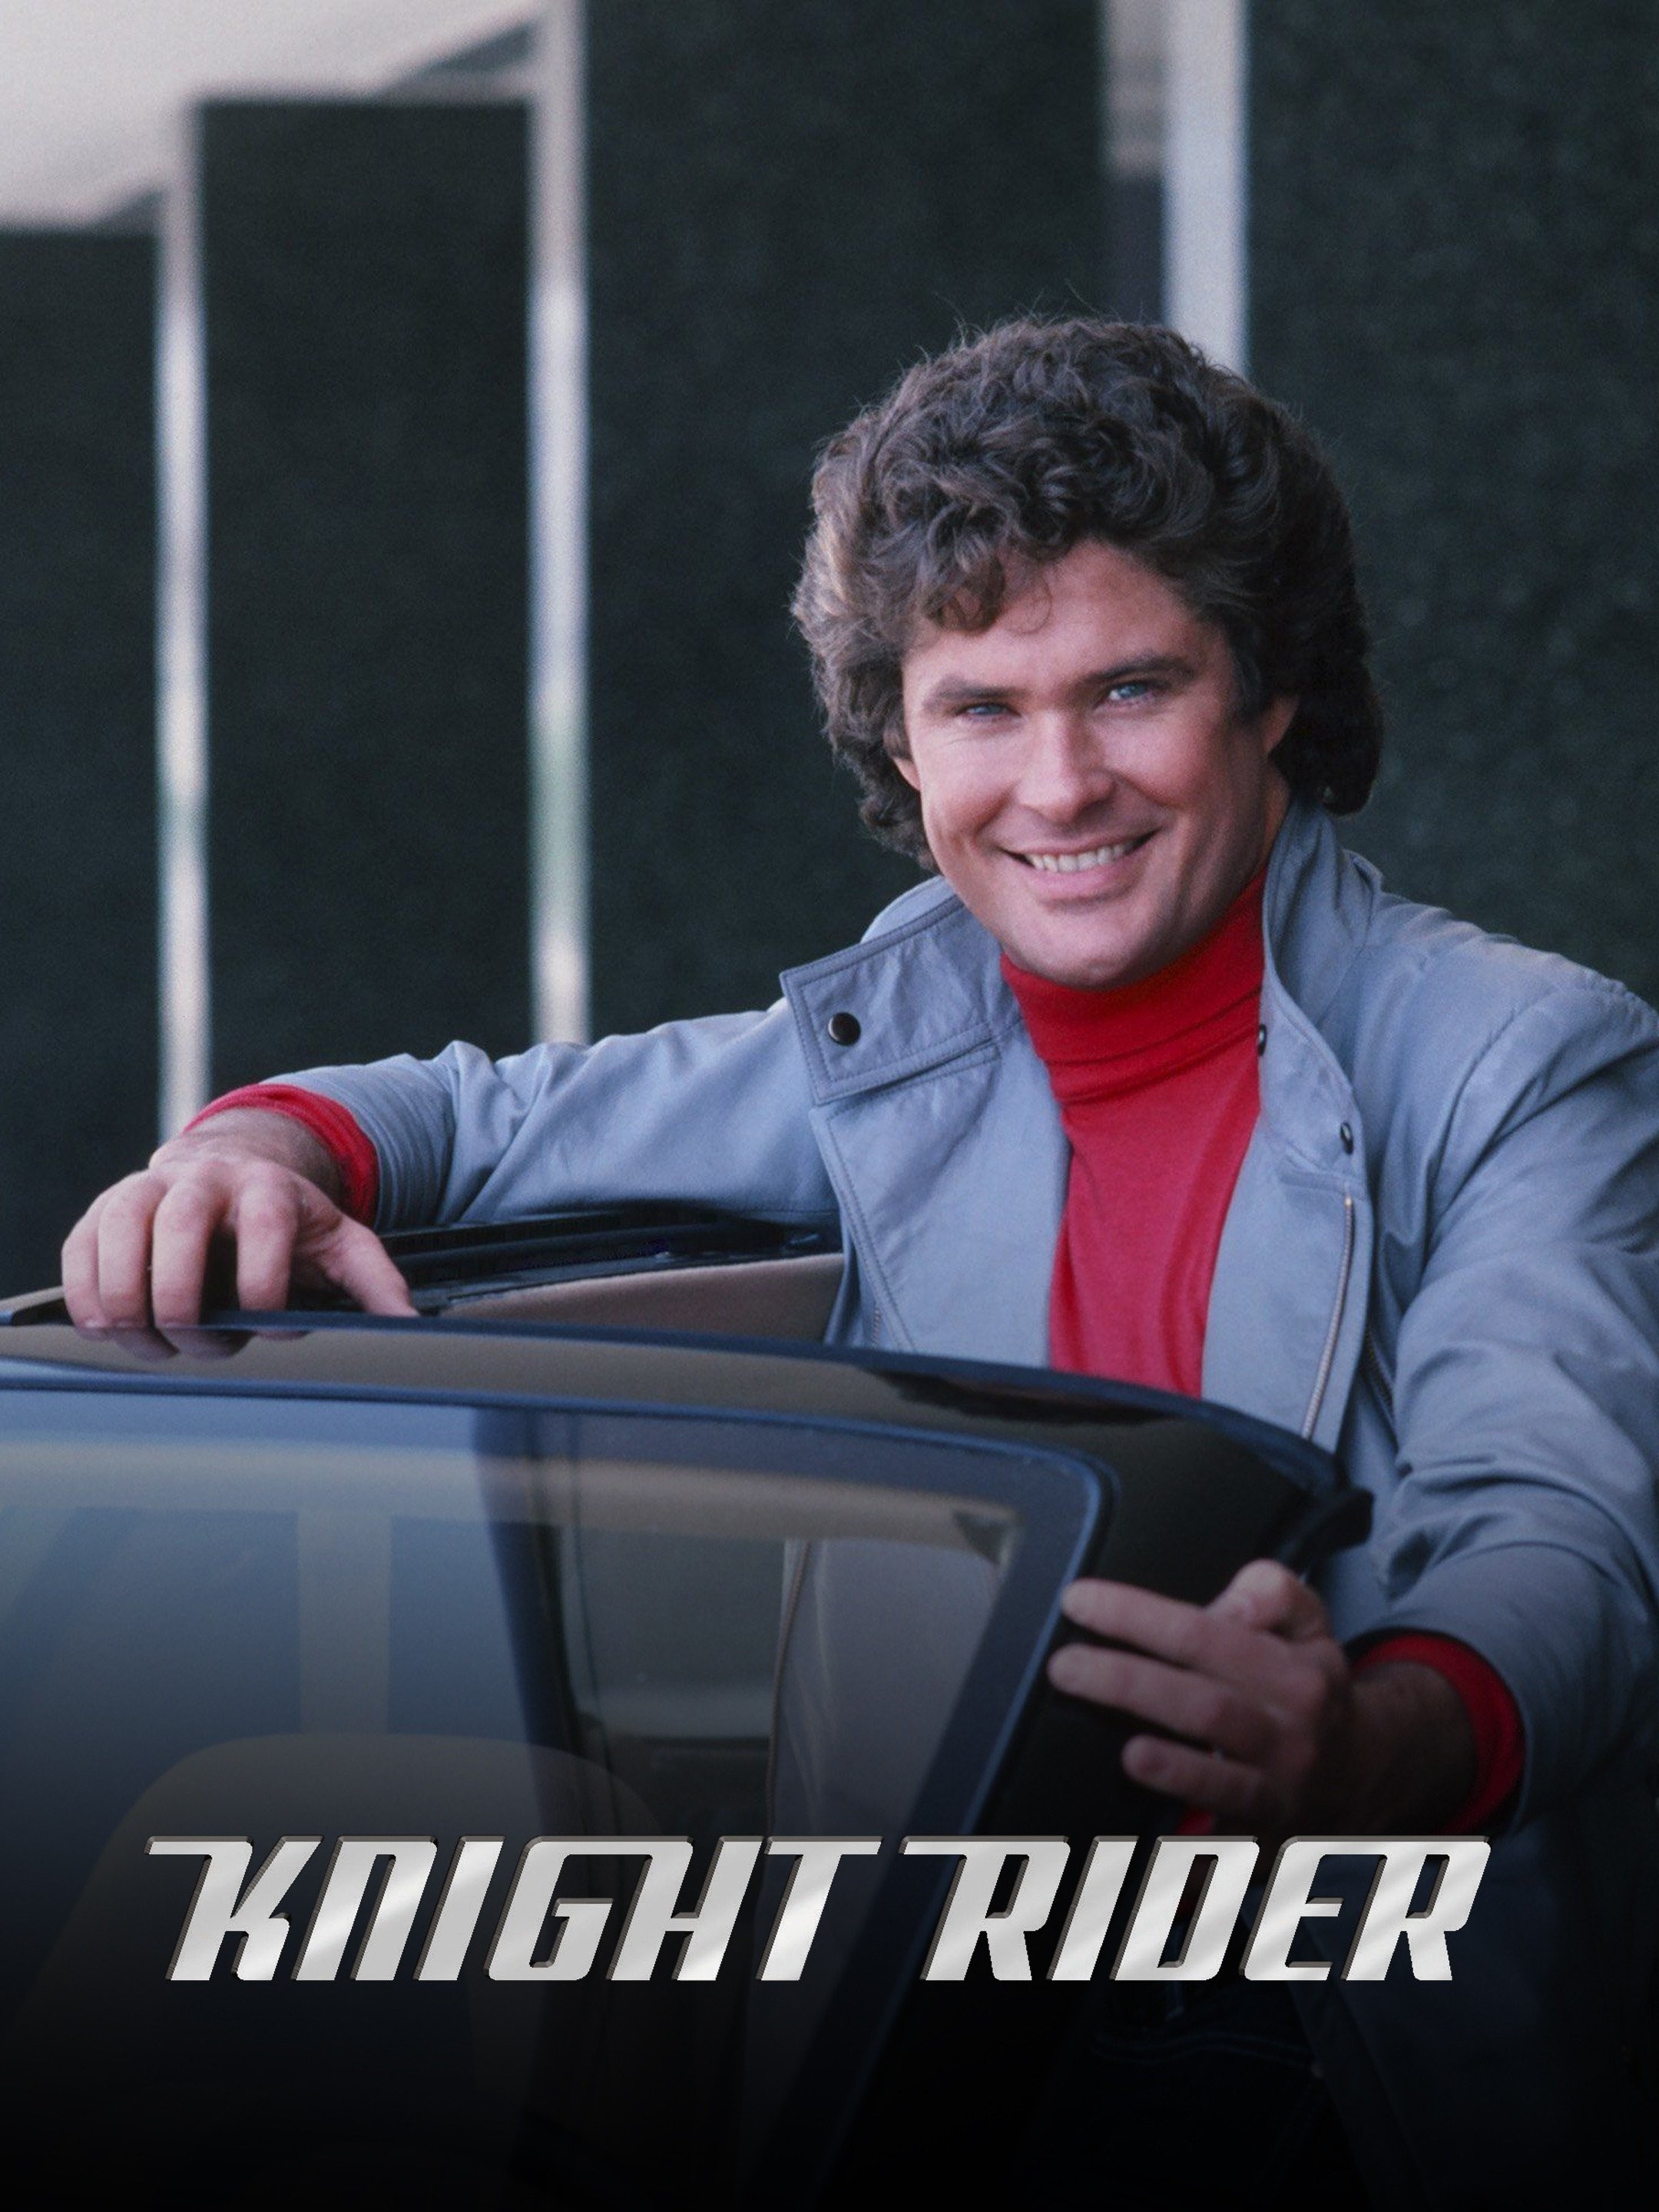 Knight Rider Season 1